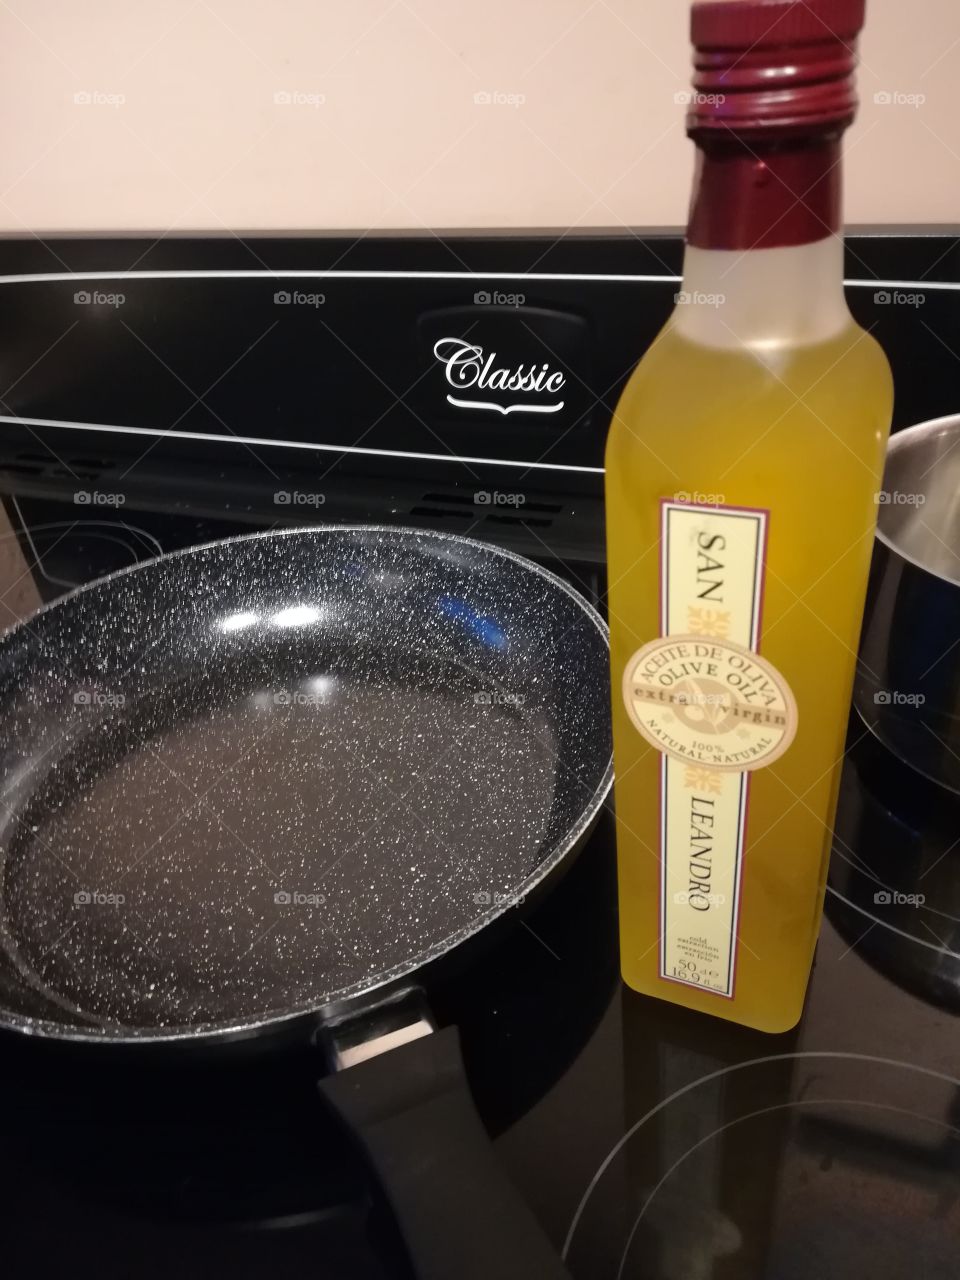 The best olive oil I've used so far